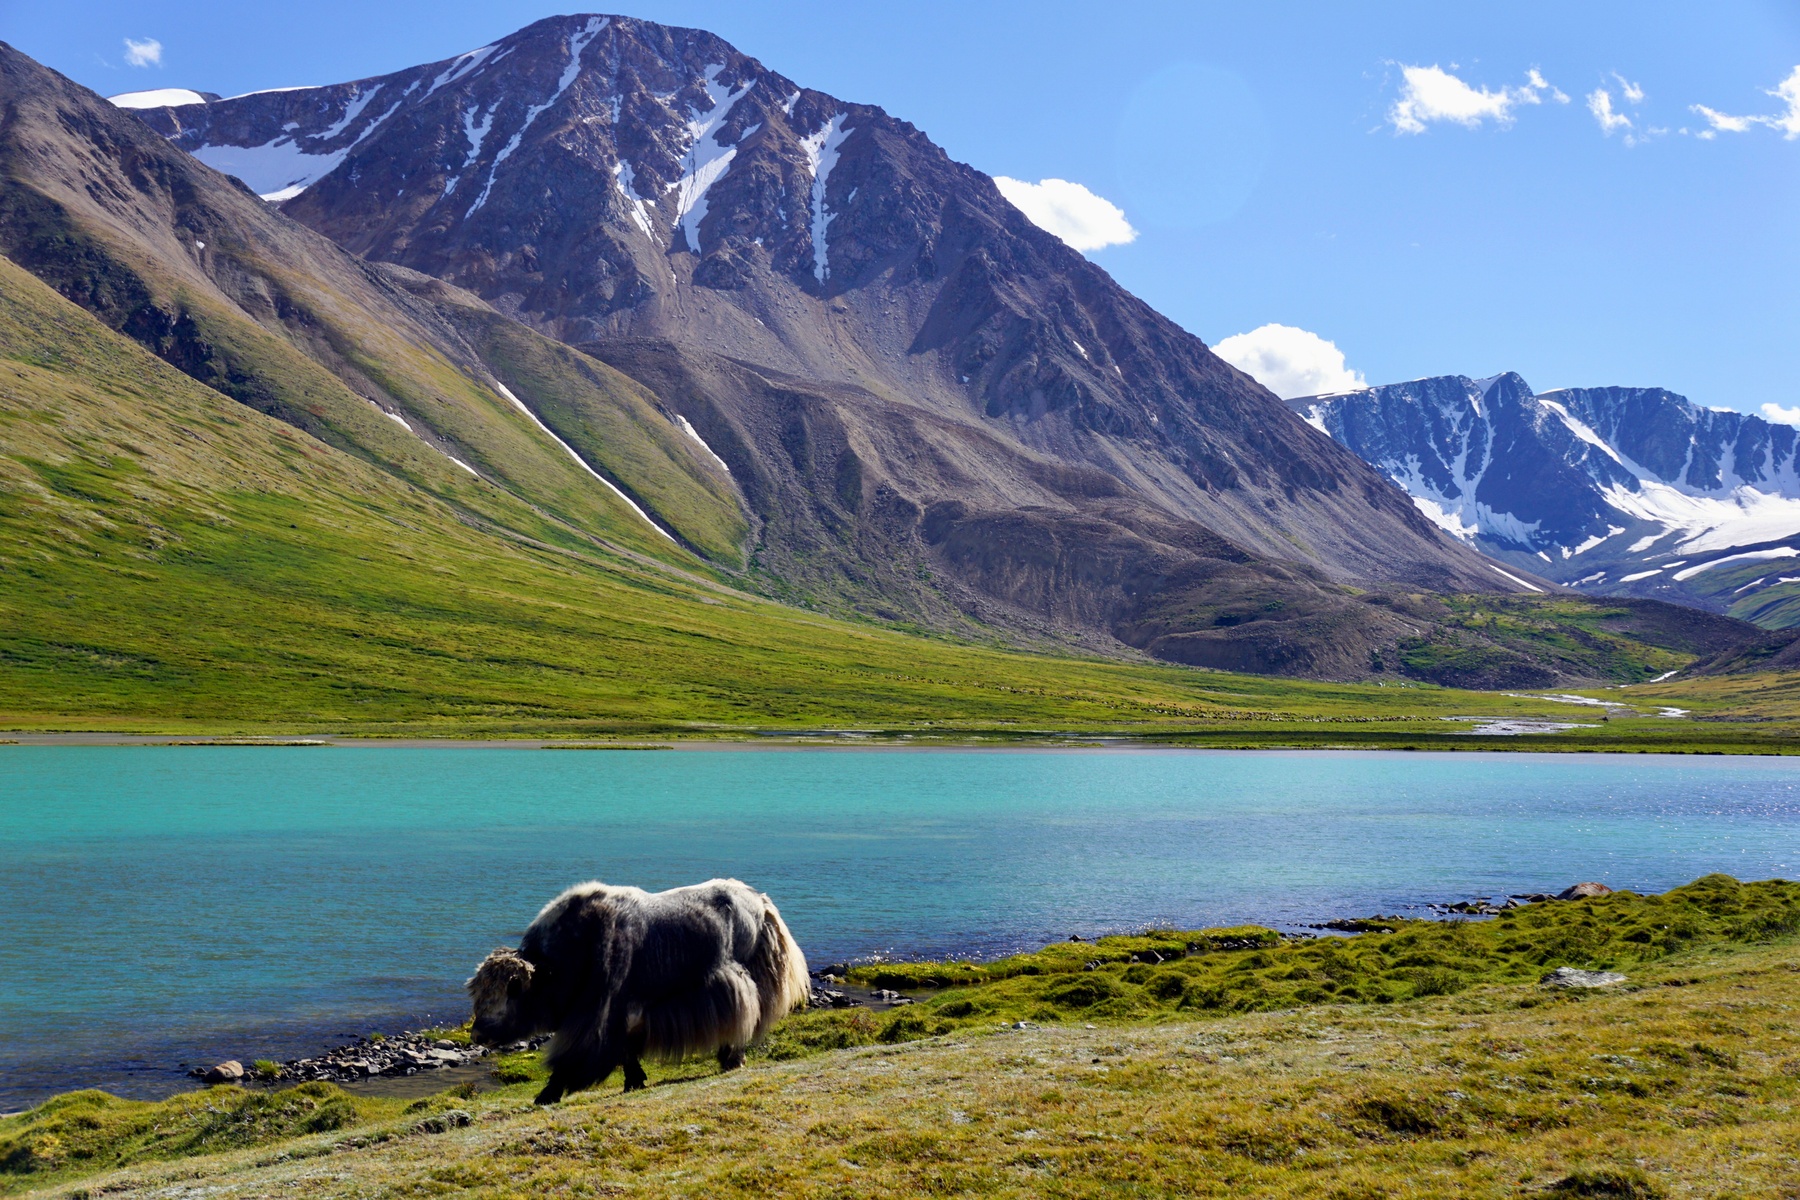 Altai Tavn Bogd National Park, Altai Mountains, Mongolia